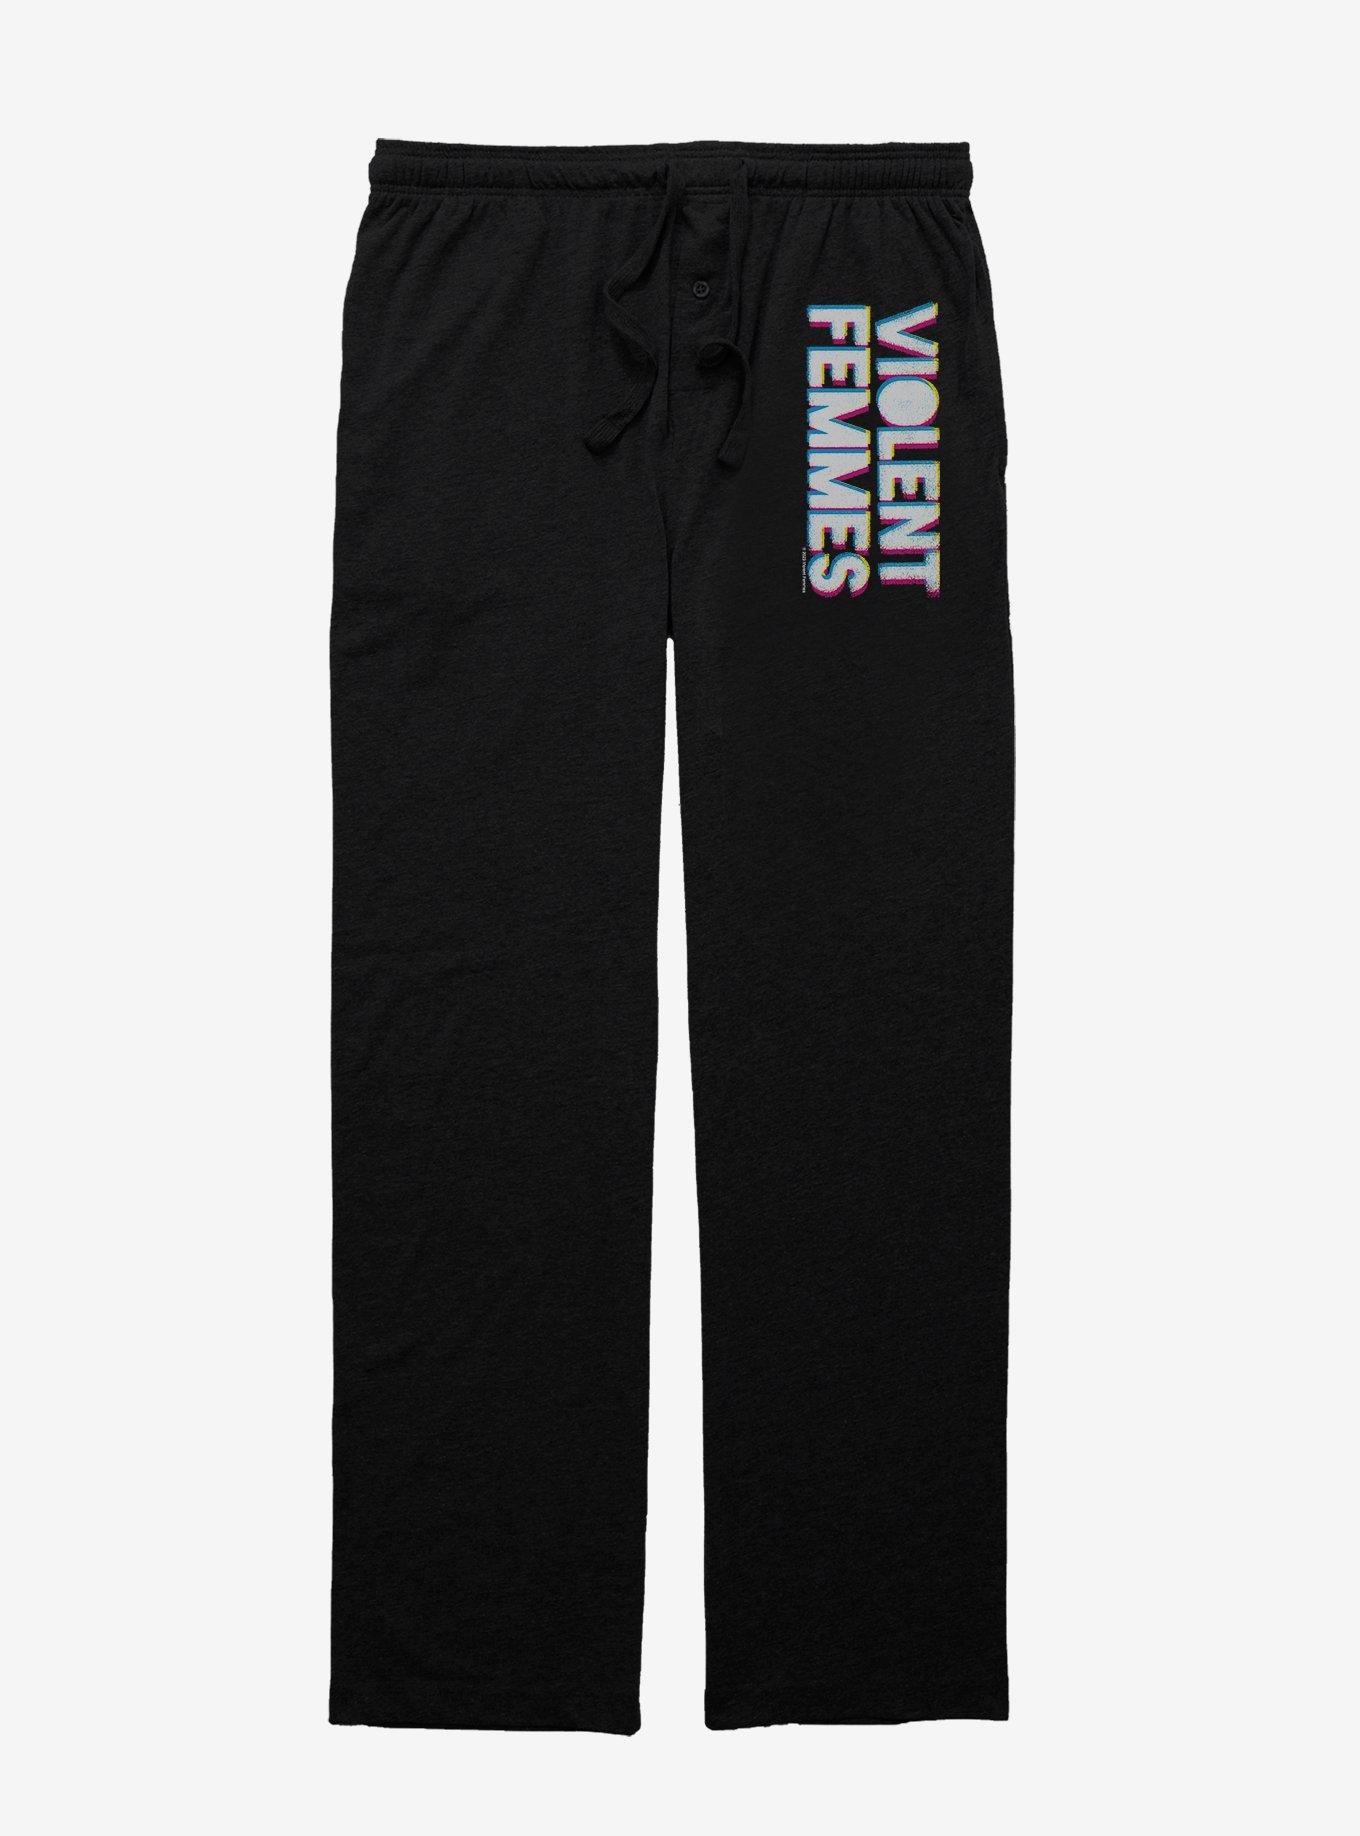 Violent Femmes Double Exposure Logo Pajama Pants, BLACK, hi-res